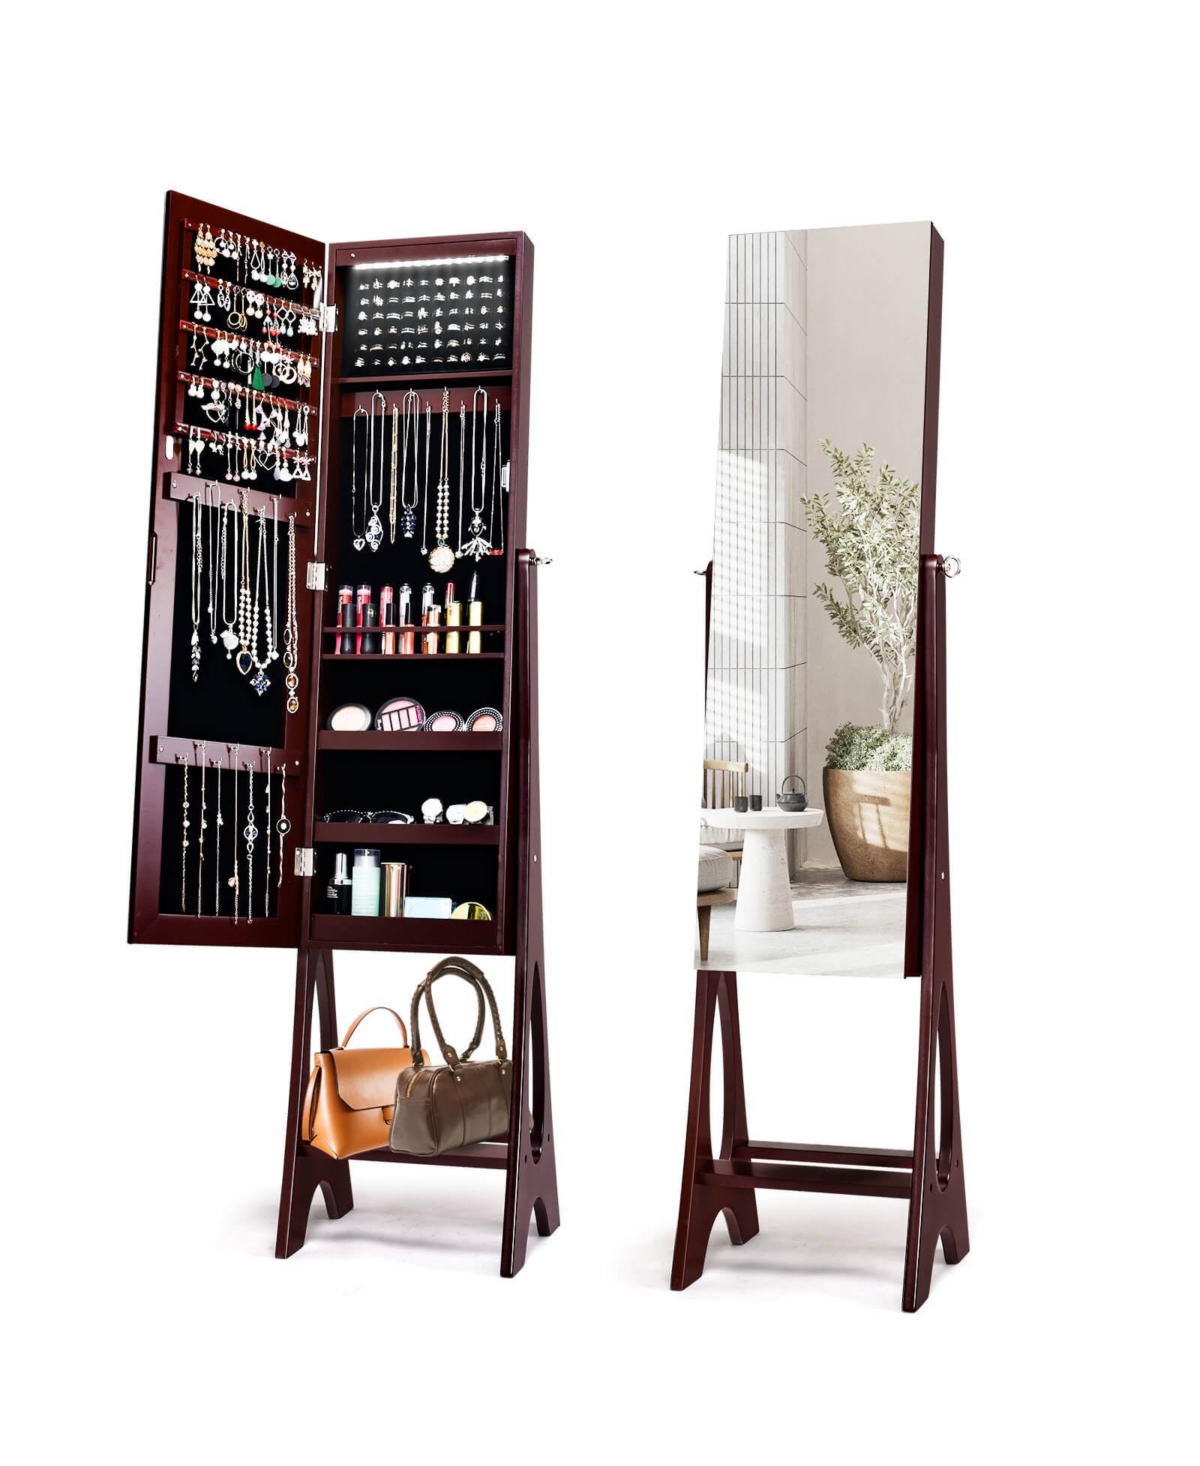 Freestanding Jewelry Cabinet Armoire Organizer with Bevel Edge Mirror - Dark brown